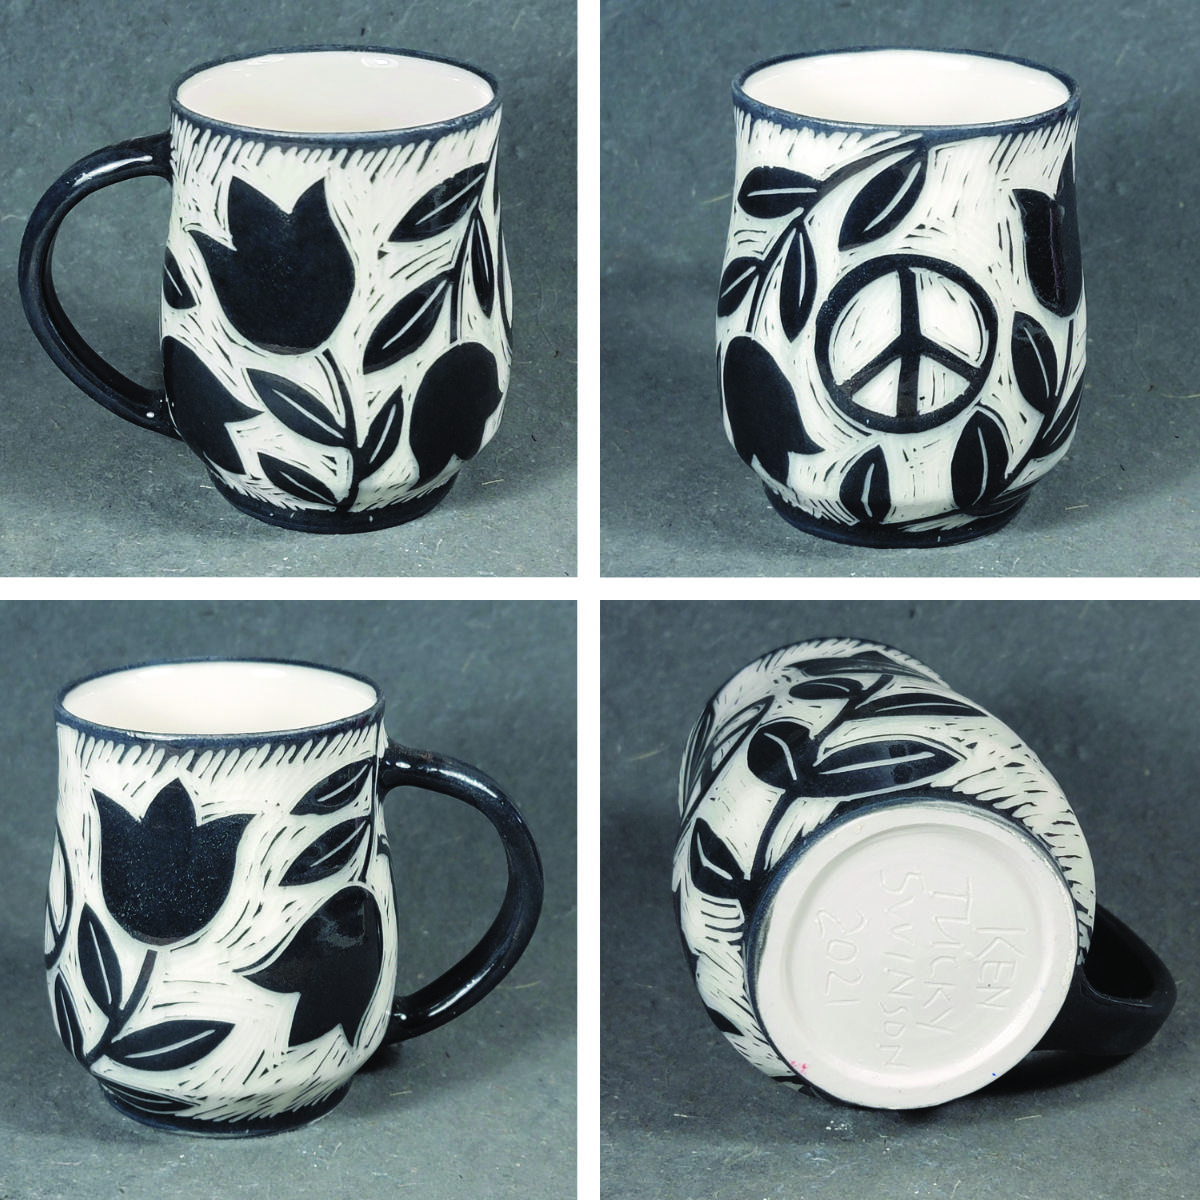 porcelain mug with tulips and a peace symbol